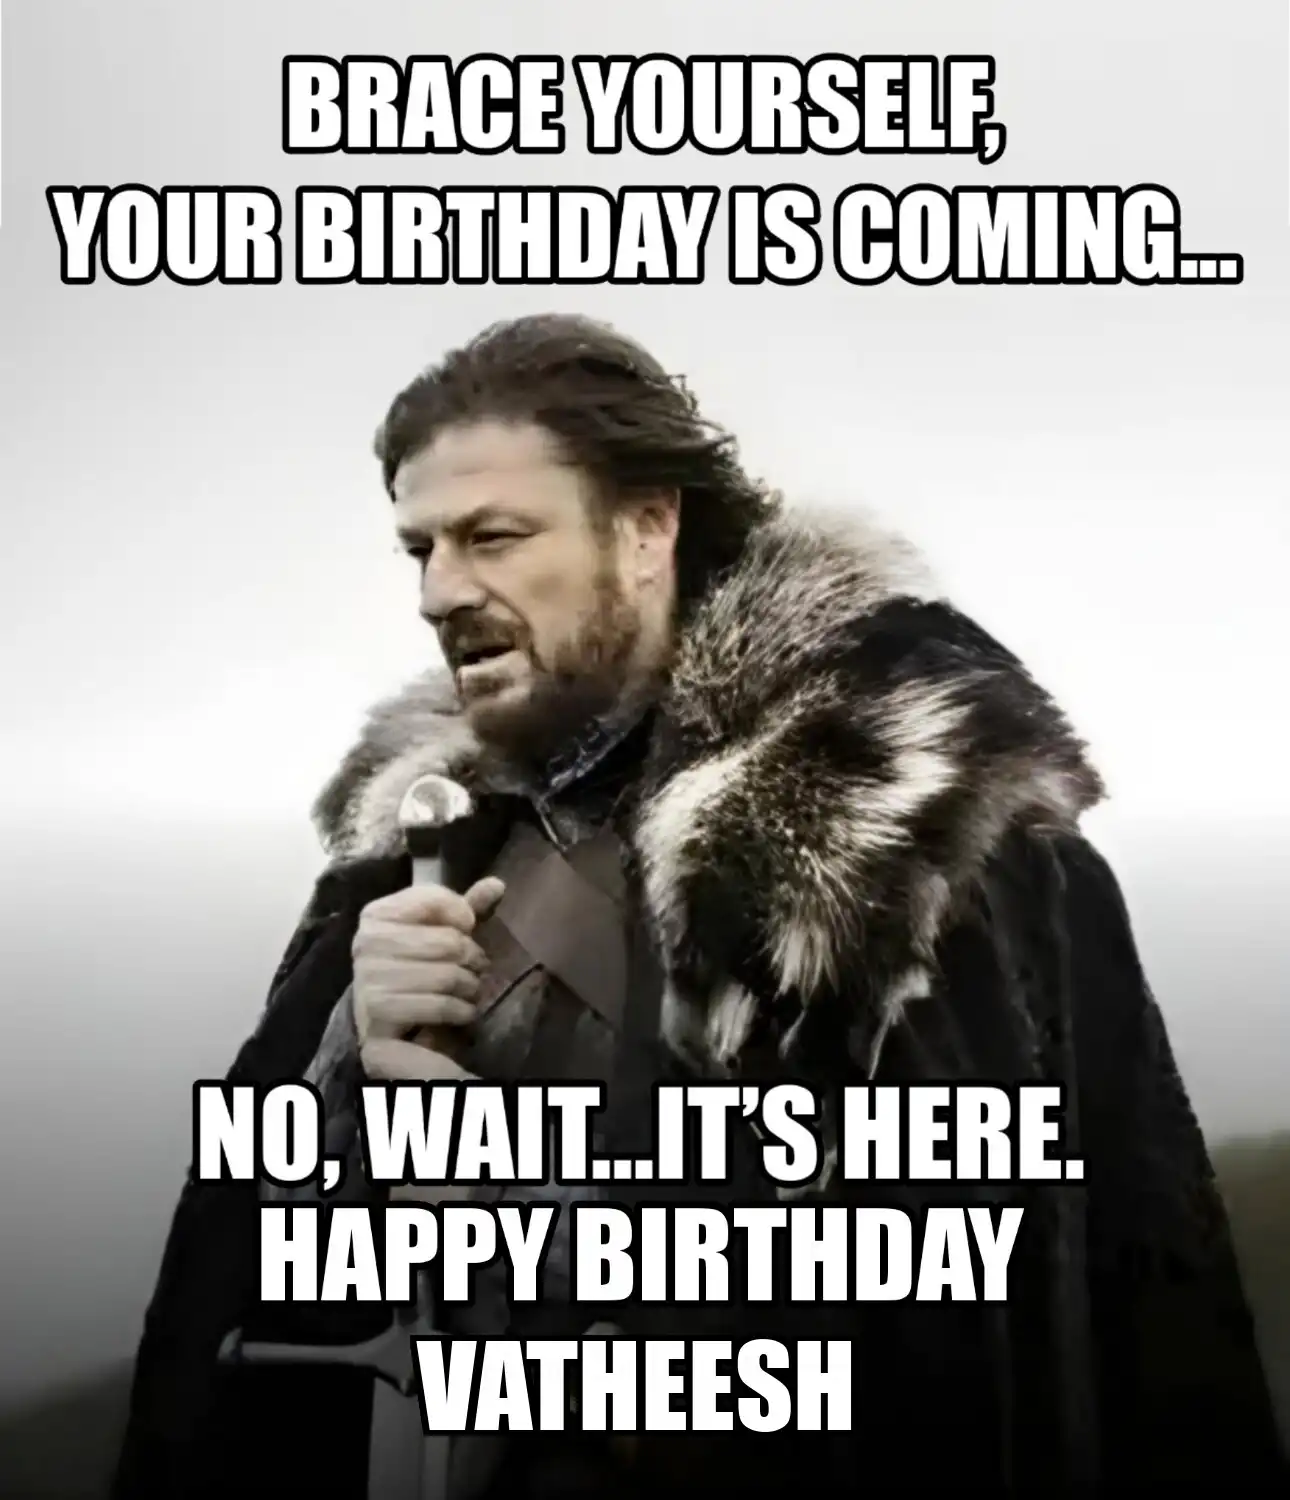 Happy Birthday Vatheesh Brace Yourself Your Birthday Is Coming Meme